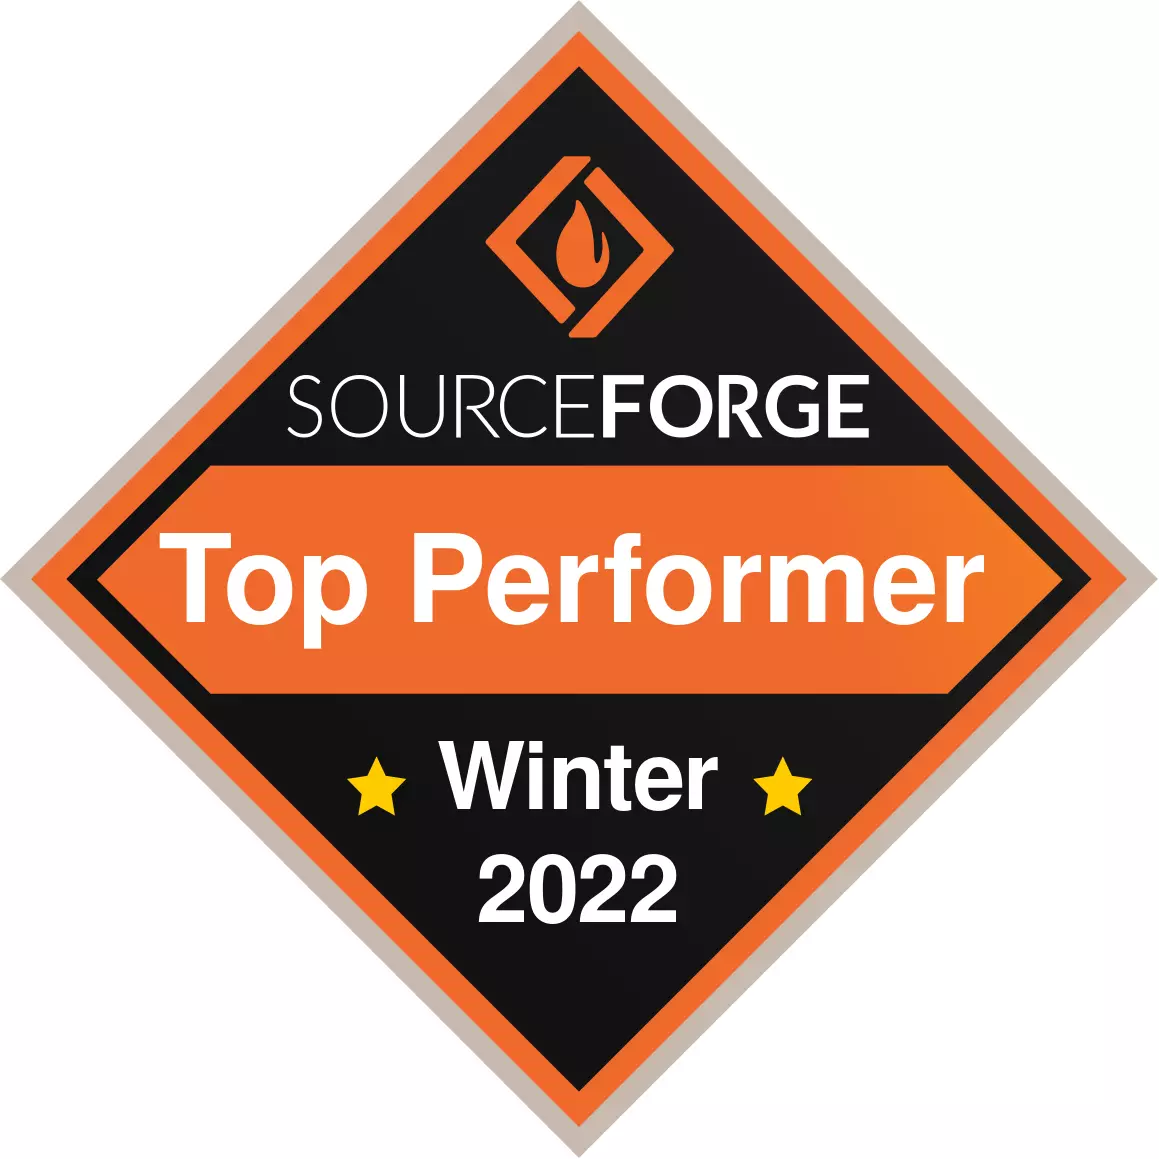 infinitemlm top performer award sourceforge 2022